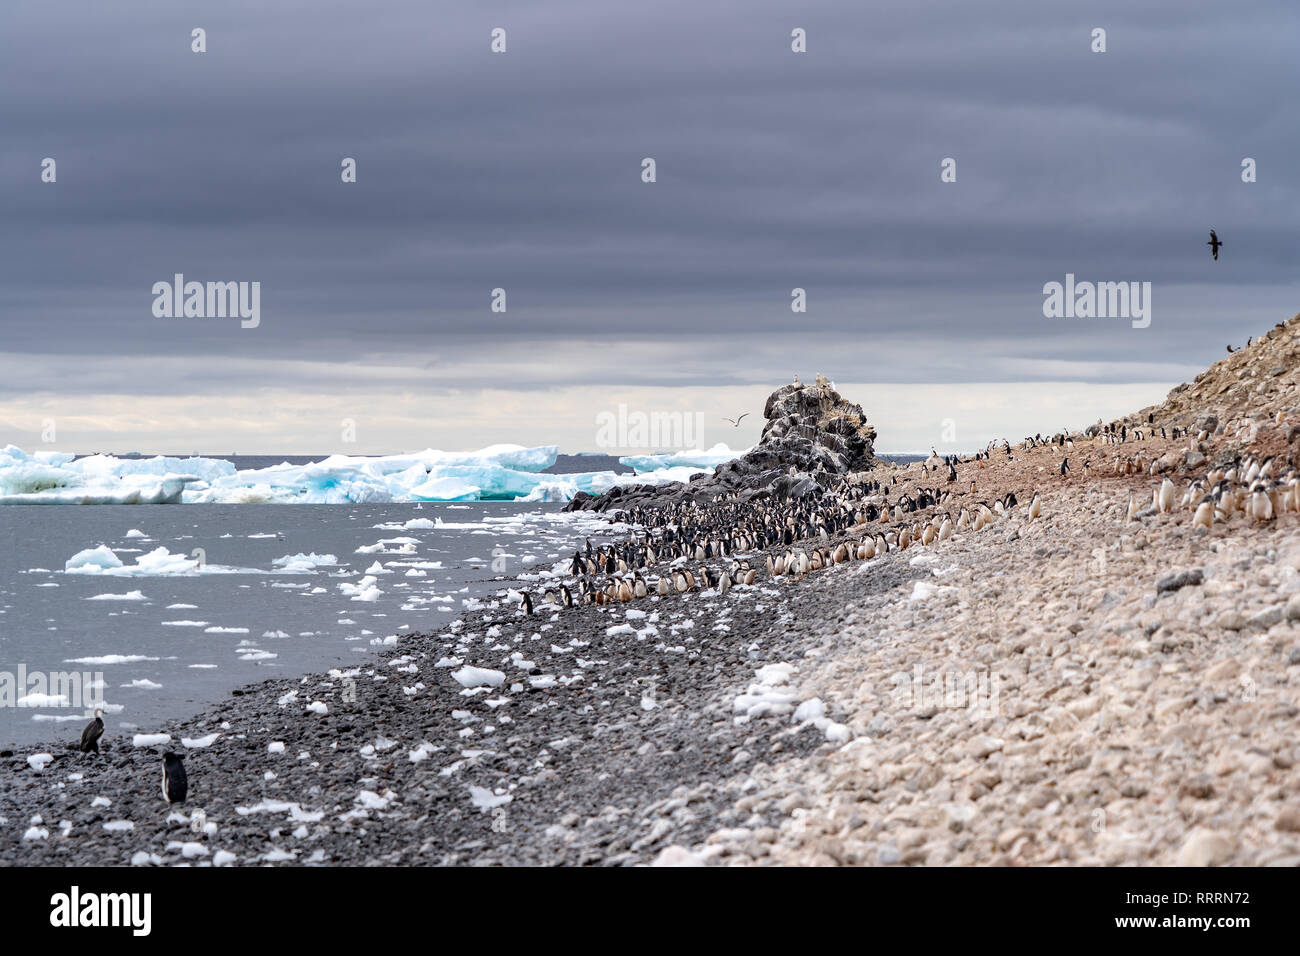 Penguins in Antarctica Stock Photo